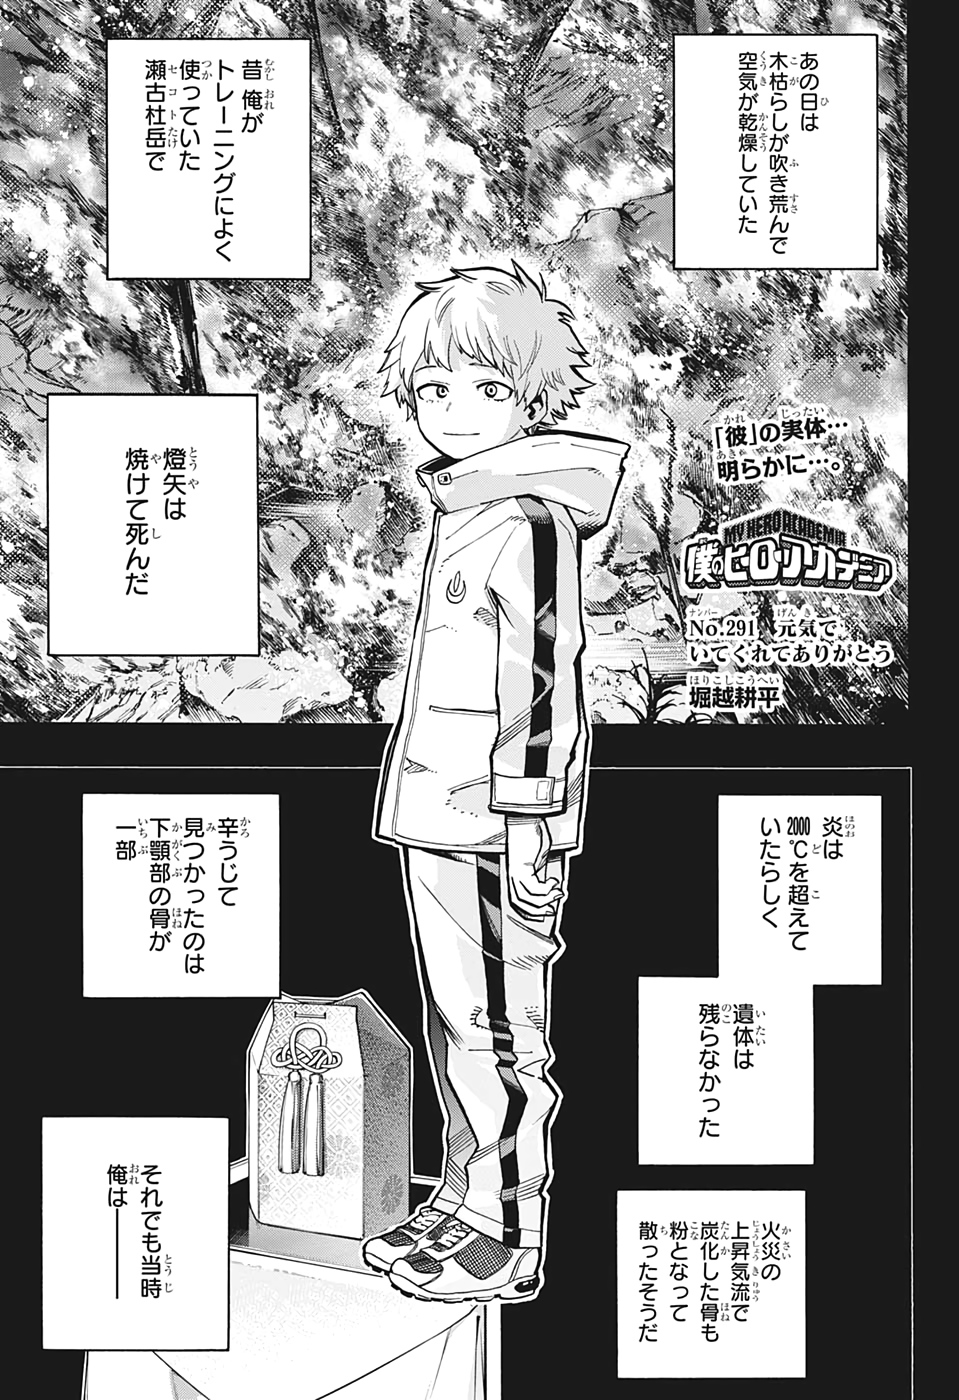 Boku no Hero Academia - Chapter 291 - Page 1